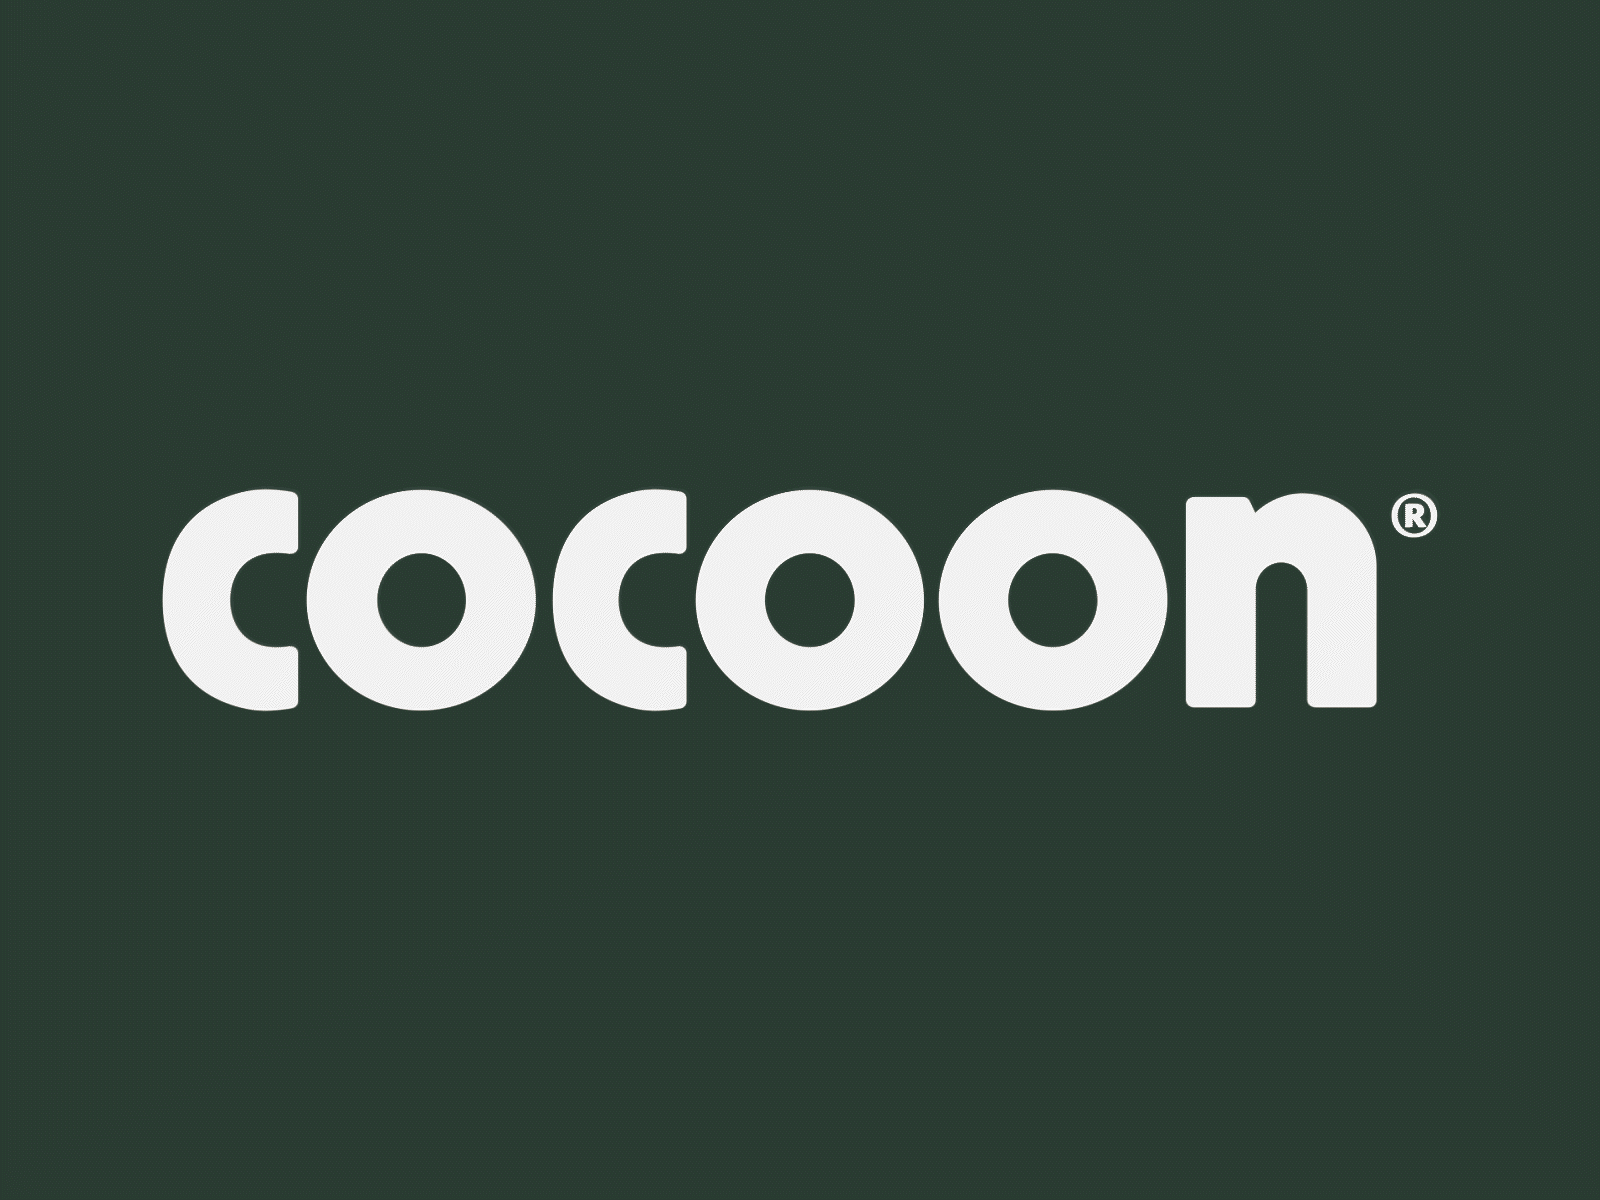 Cocoon Logo Animation